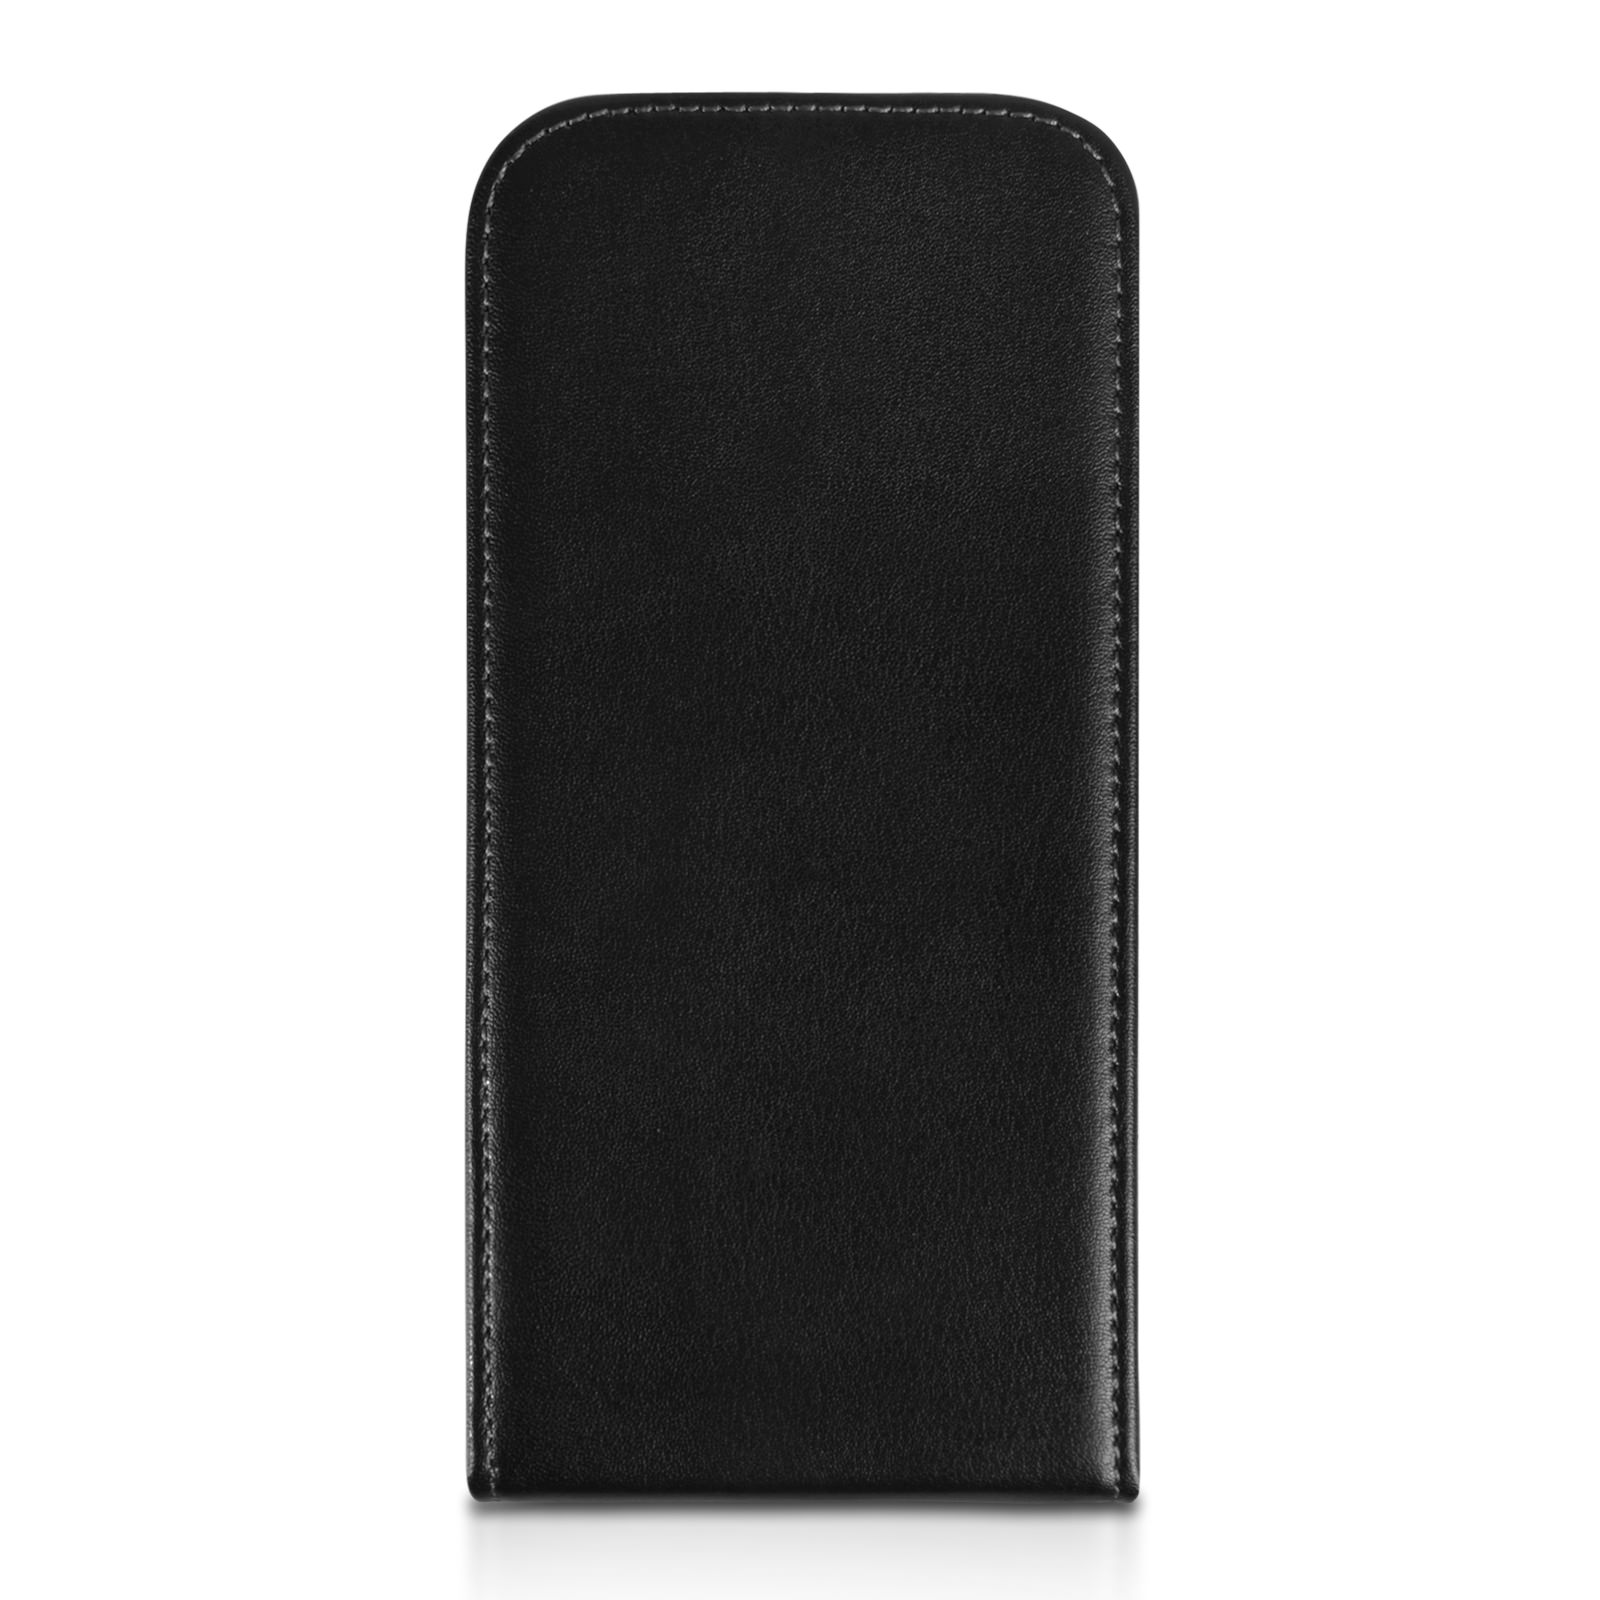 Caseflex HTC One M8 Real Leather Flip Case - Black